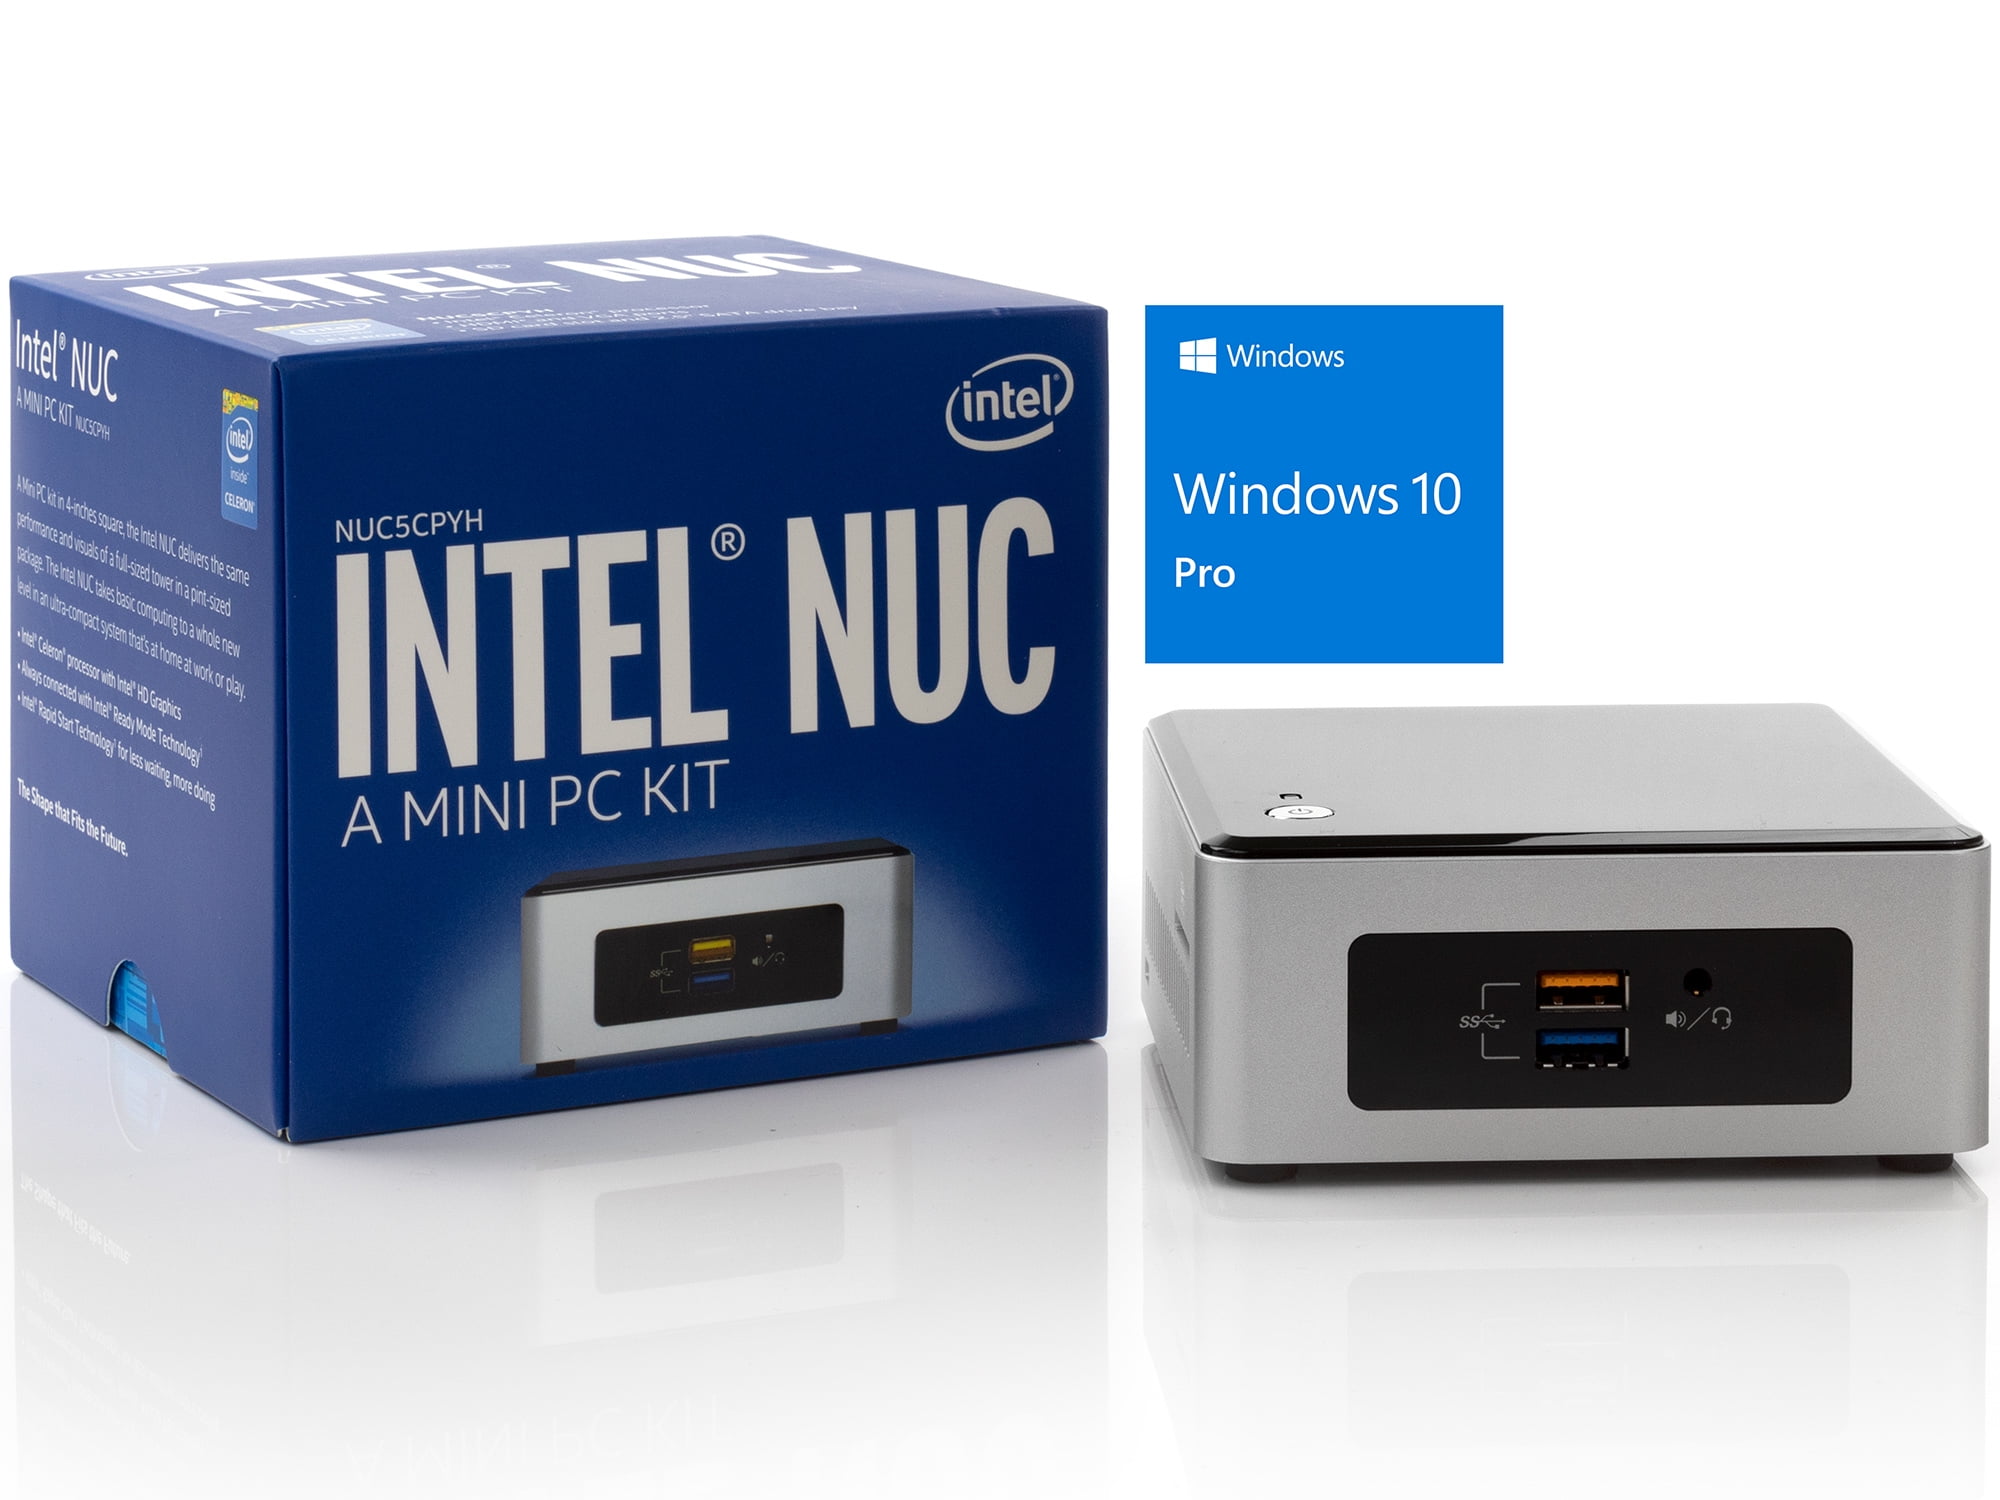 Intel NUC NUC5CPYH